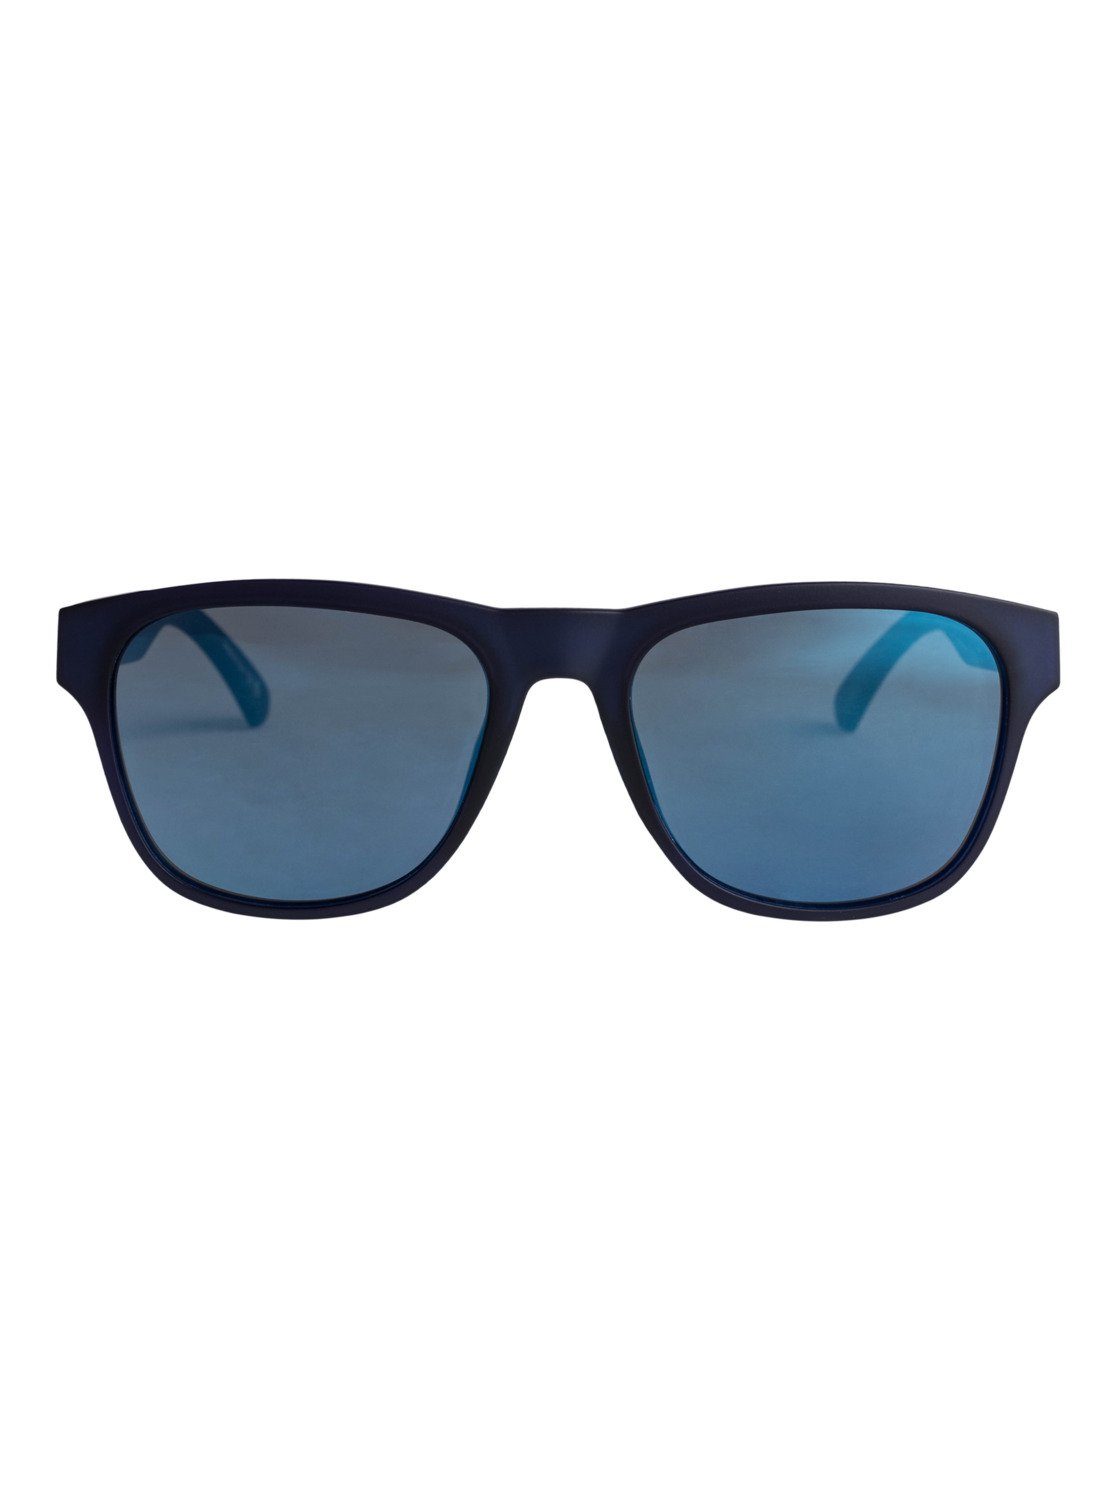 Quiksilver Sonnenbrille Tagger Blue Navy/Flash